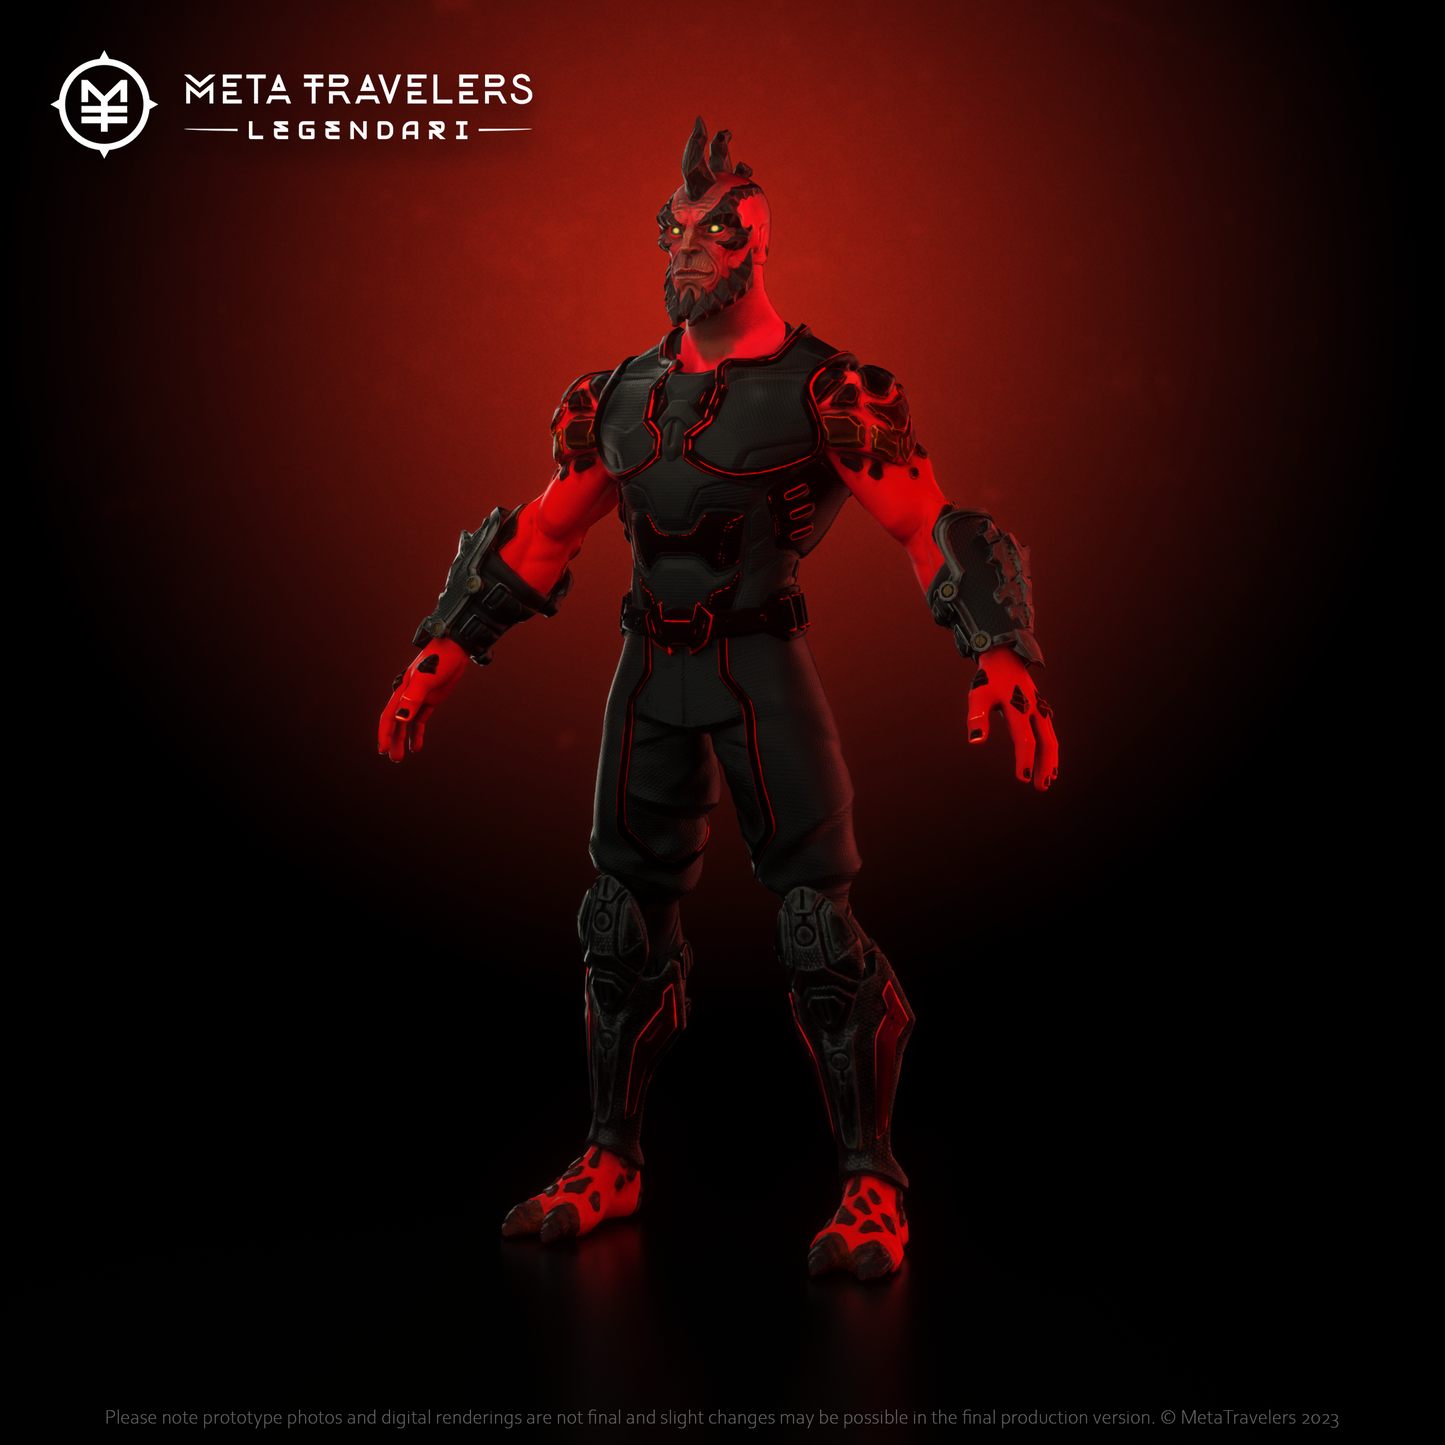 Legendari Crimson Enforcer Action Figure